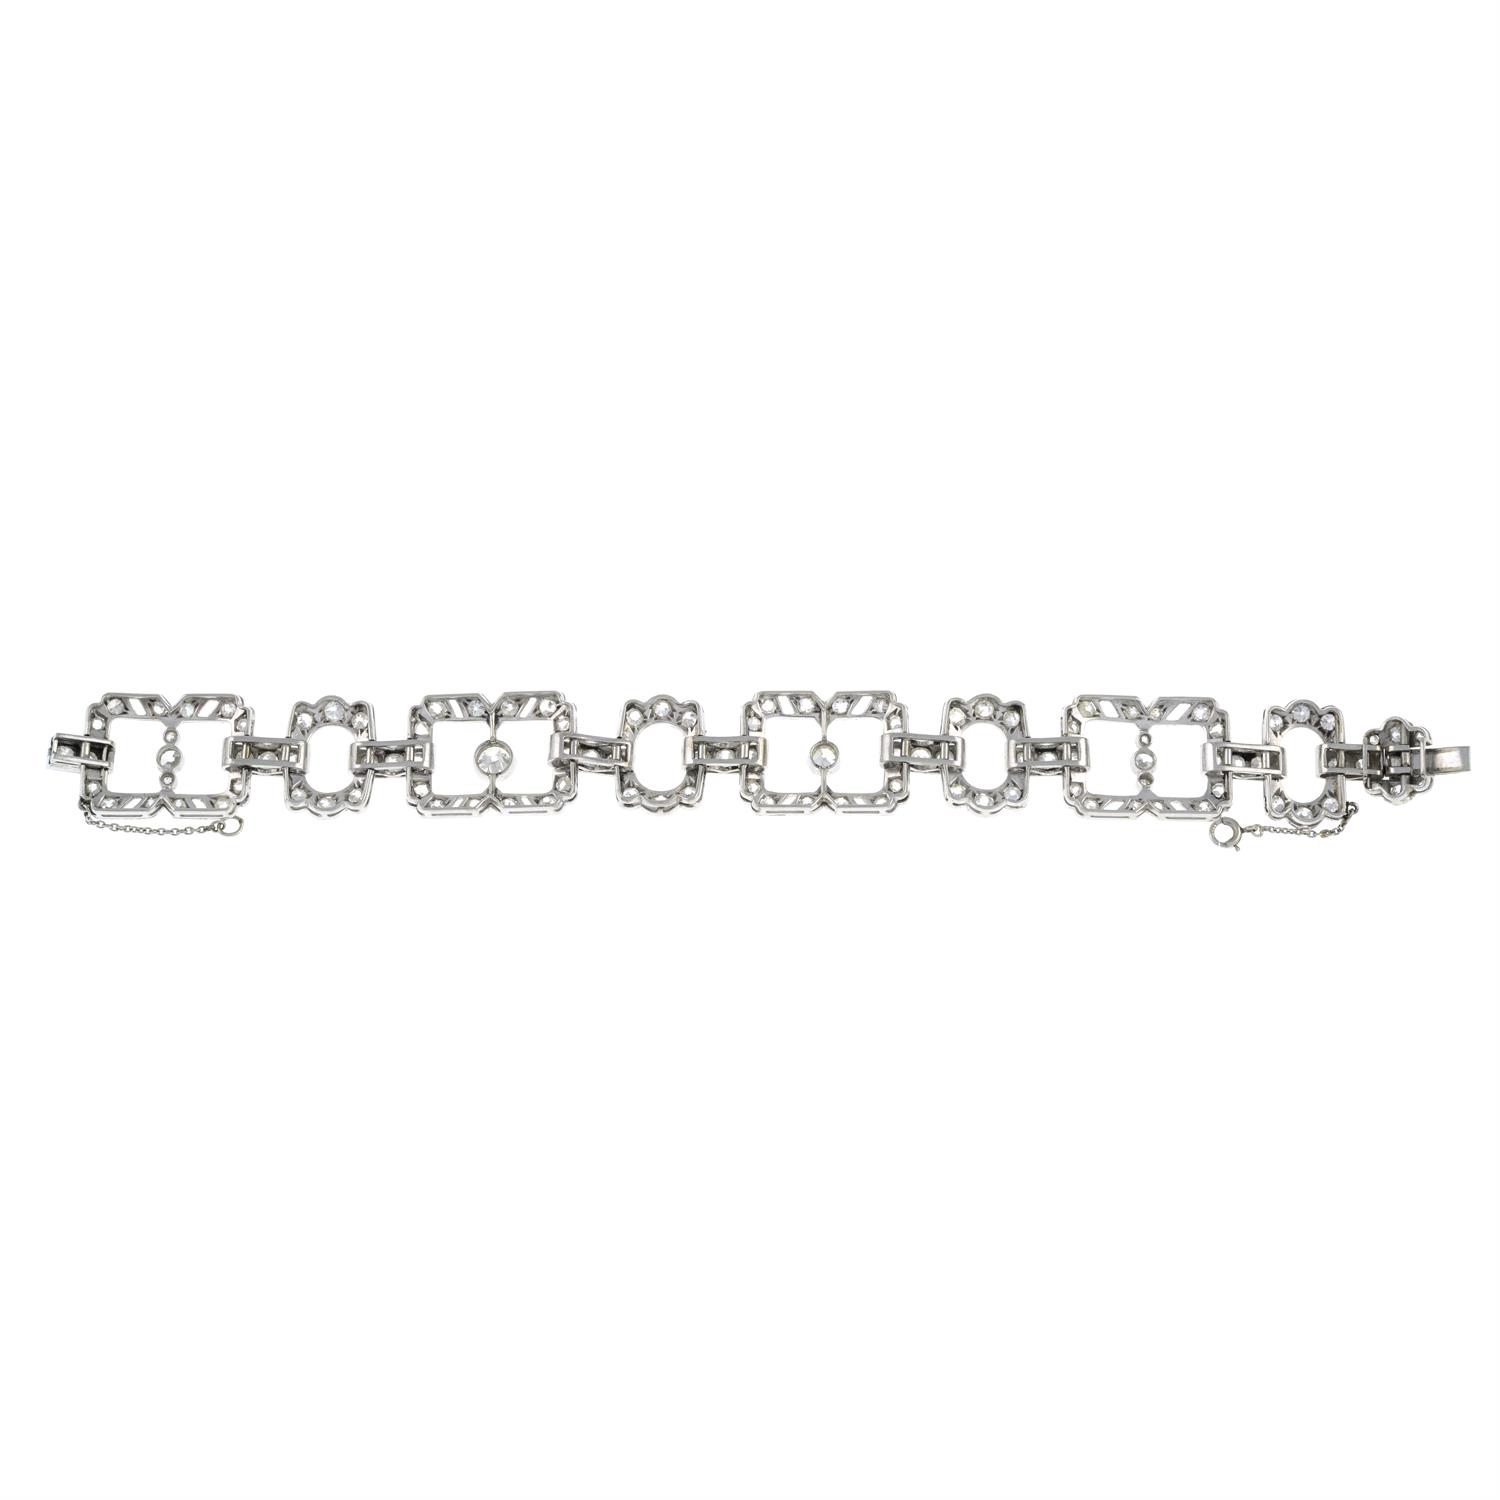 Art Deco diamond bracelet - Image 3 of 5